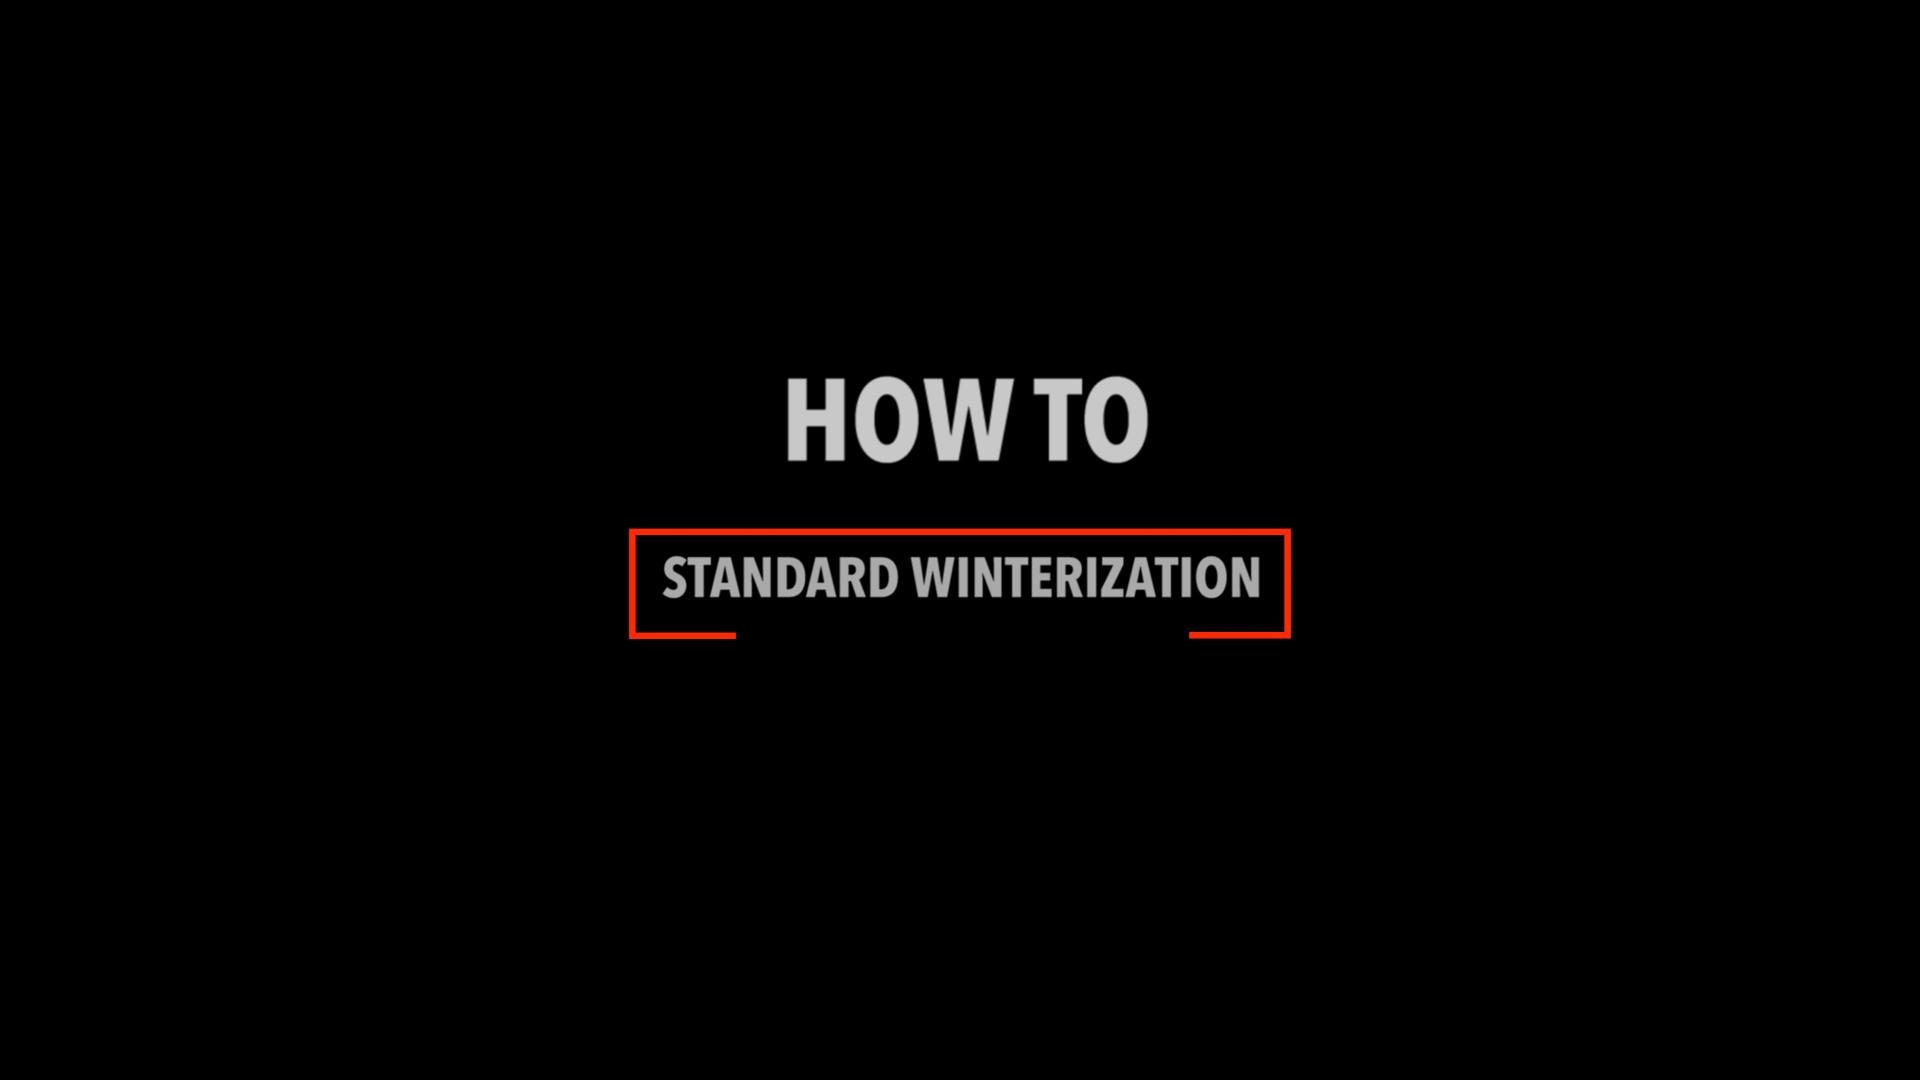 Standard Winterization